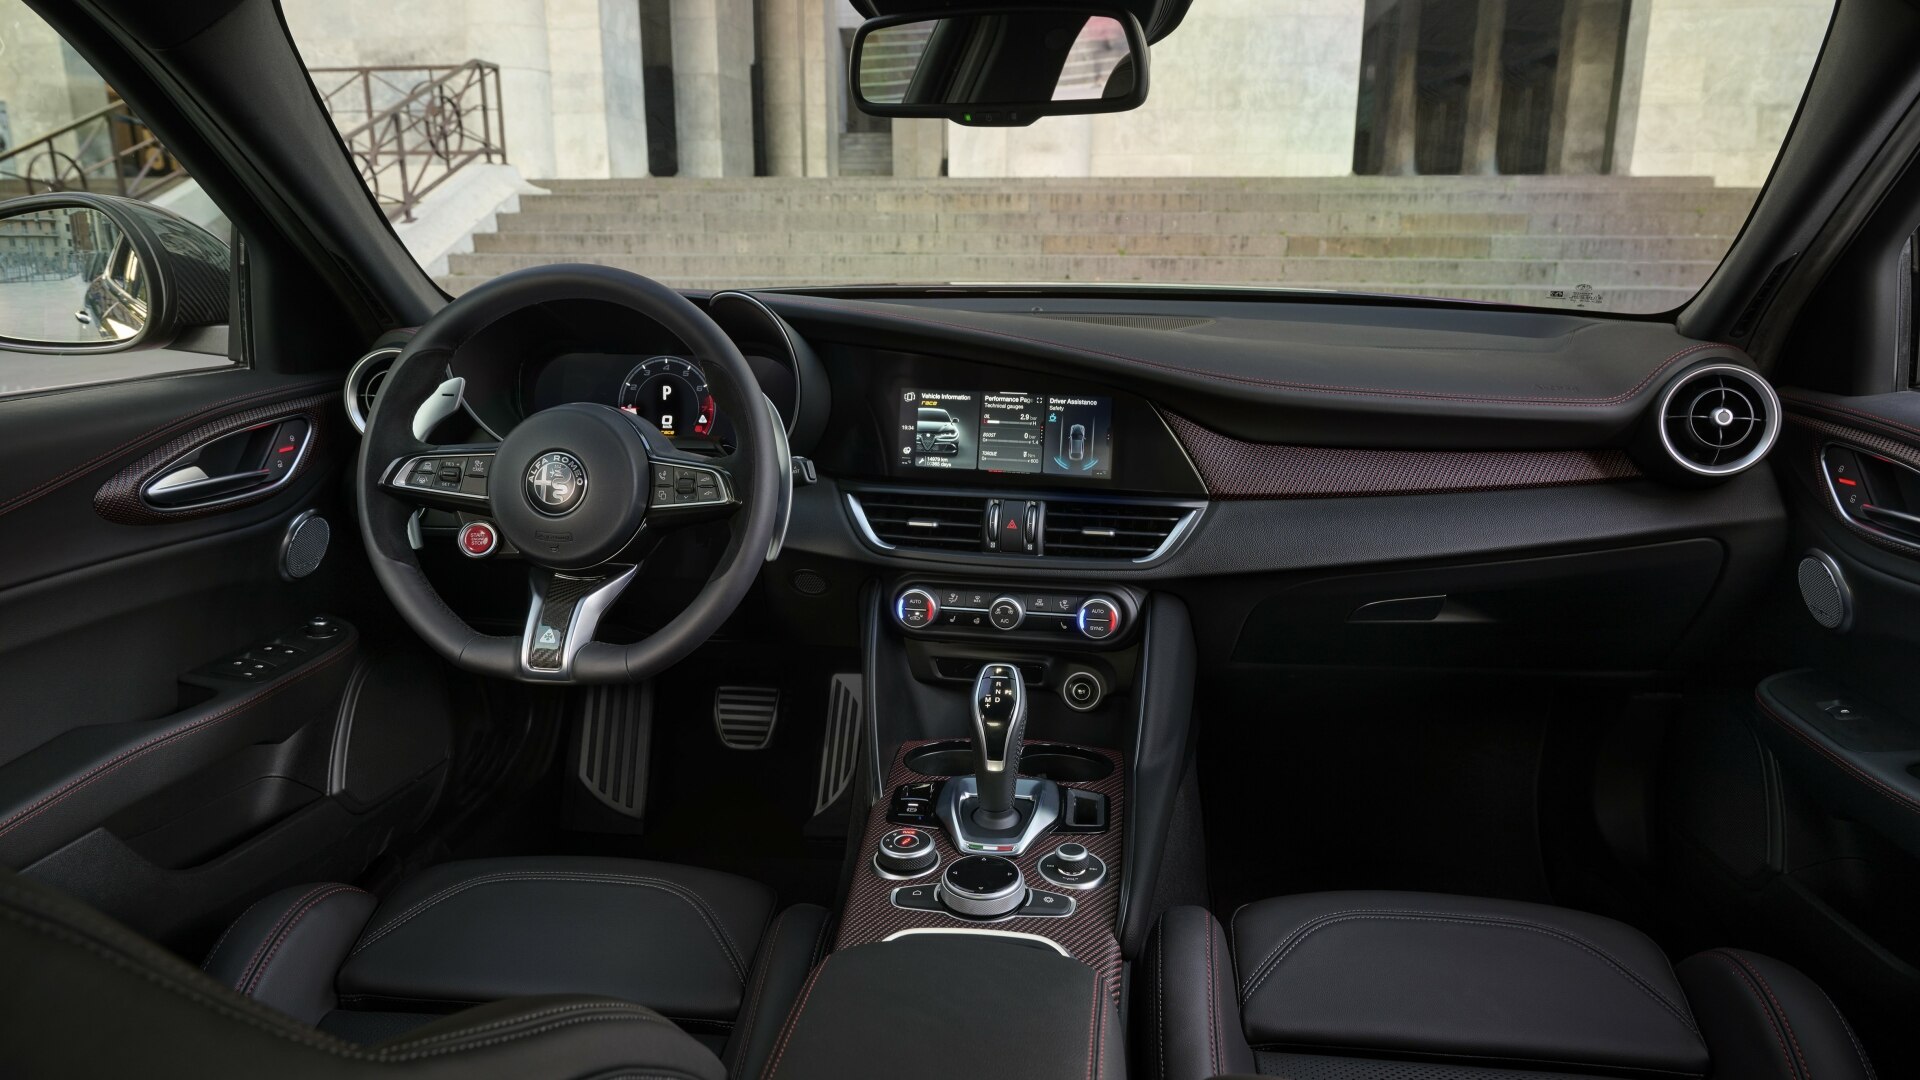 The Red Carbon Interior Accented Cockpit Of The Alfa Romeo Giulia Super Sport